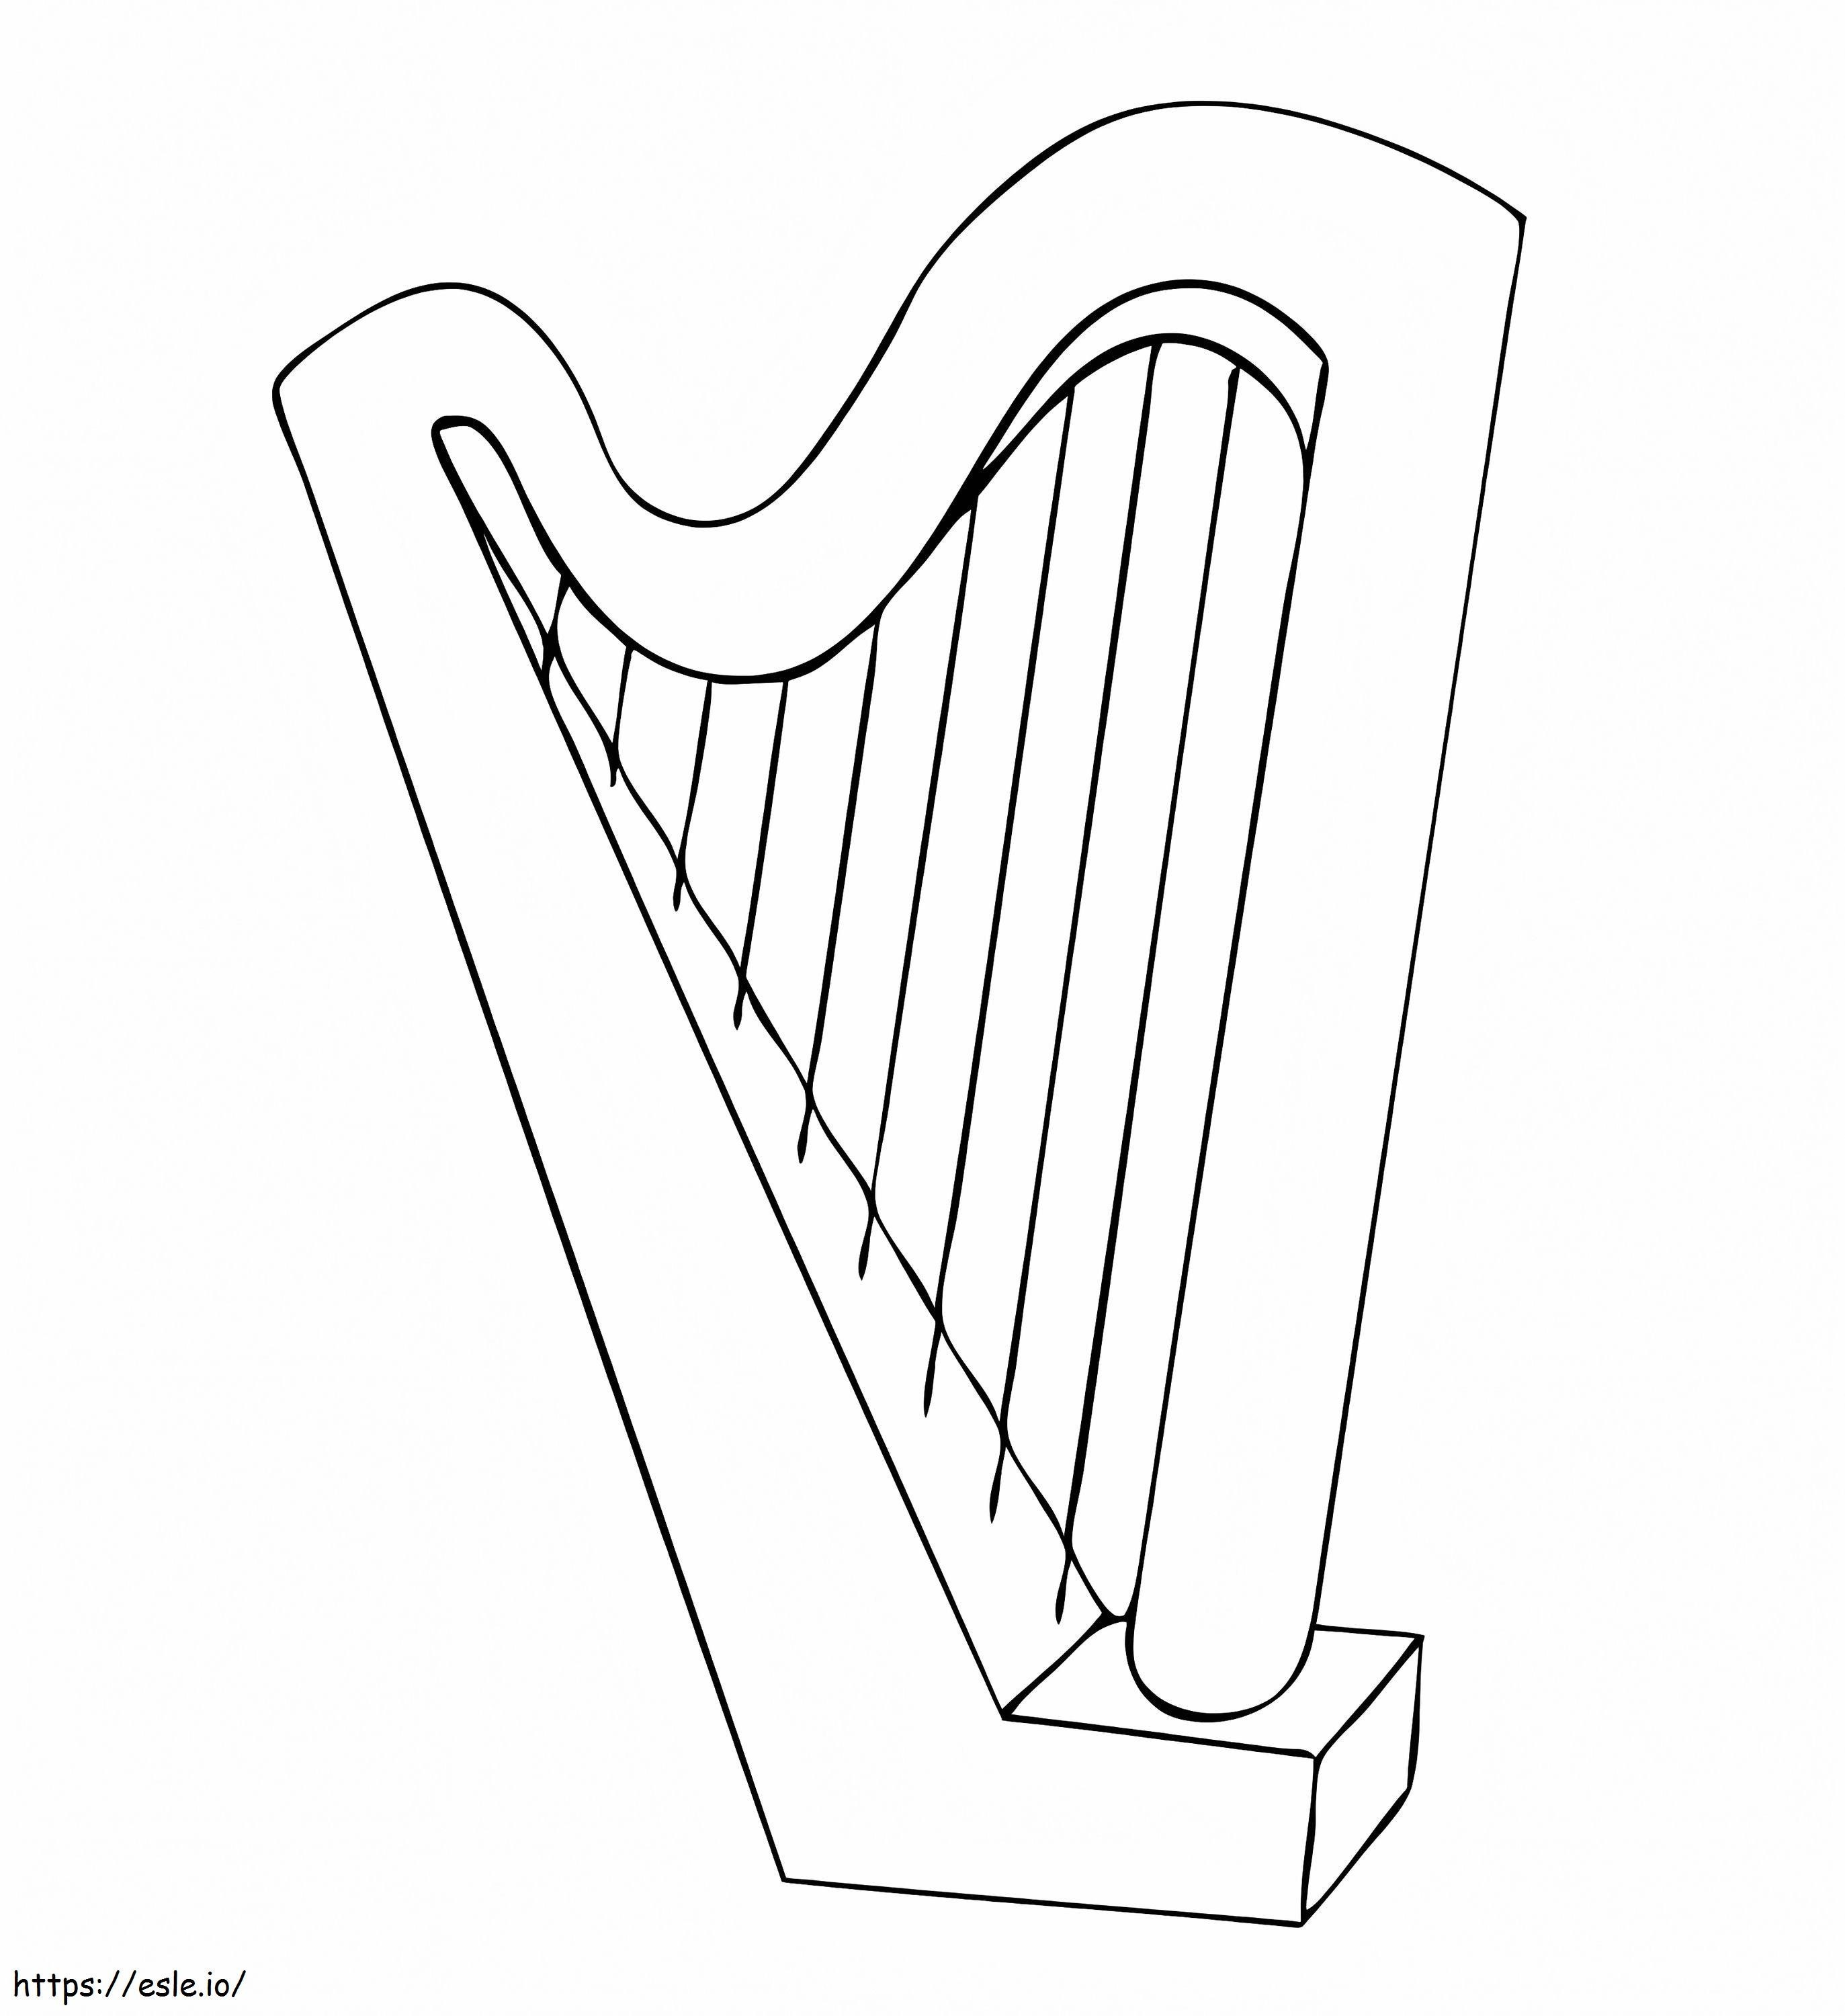 Coloriage Harpe simple à imprimer dessin